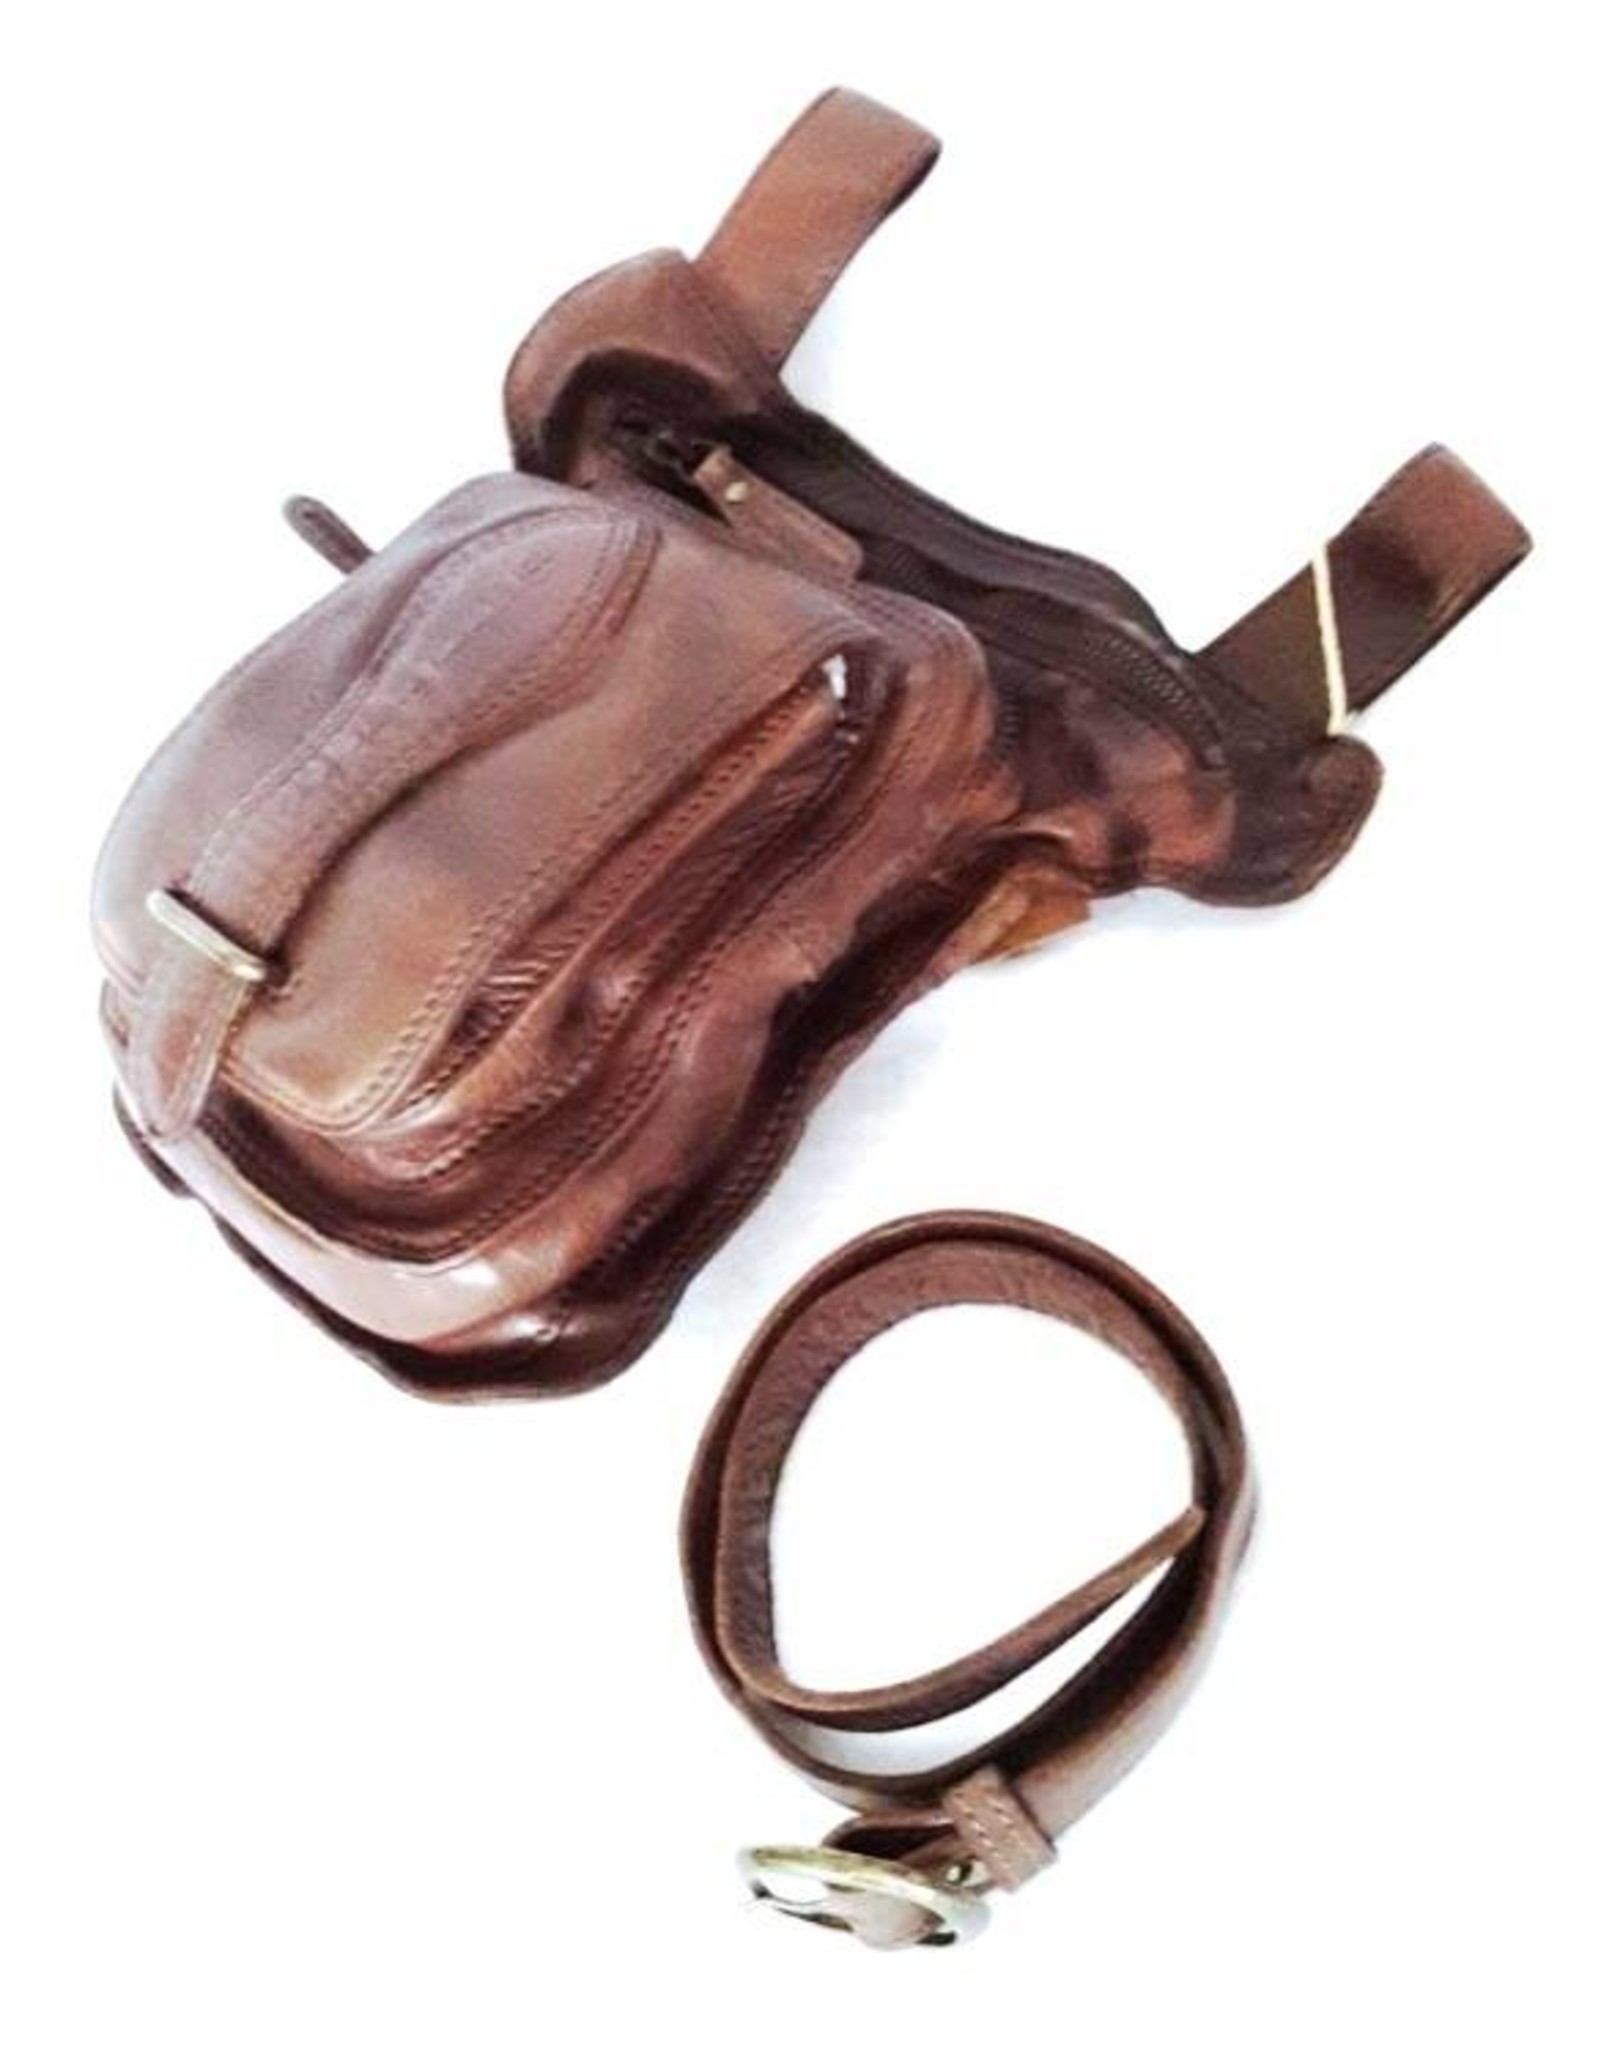 HillBurry Leather bags - Hillburry belt bag - leg bag washed leather brown